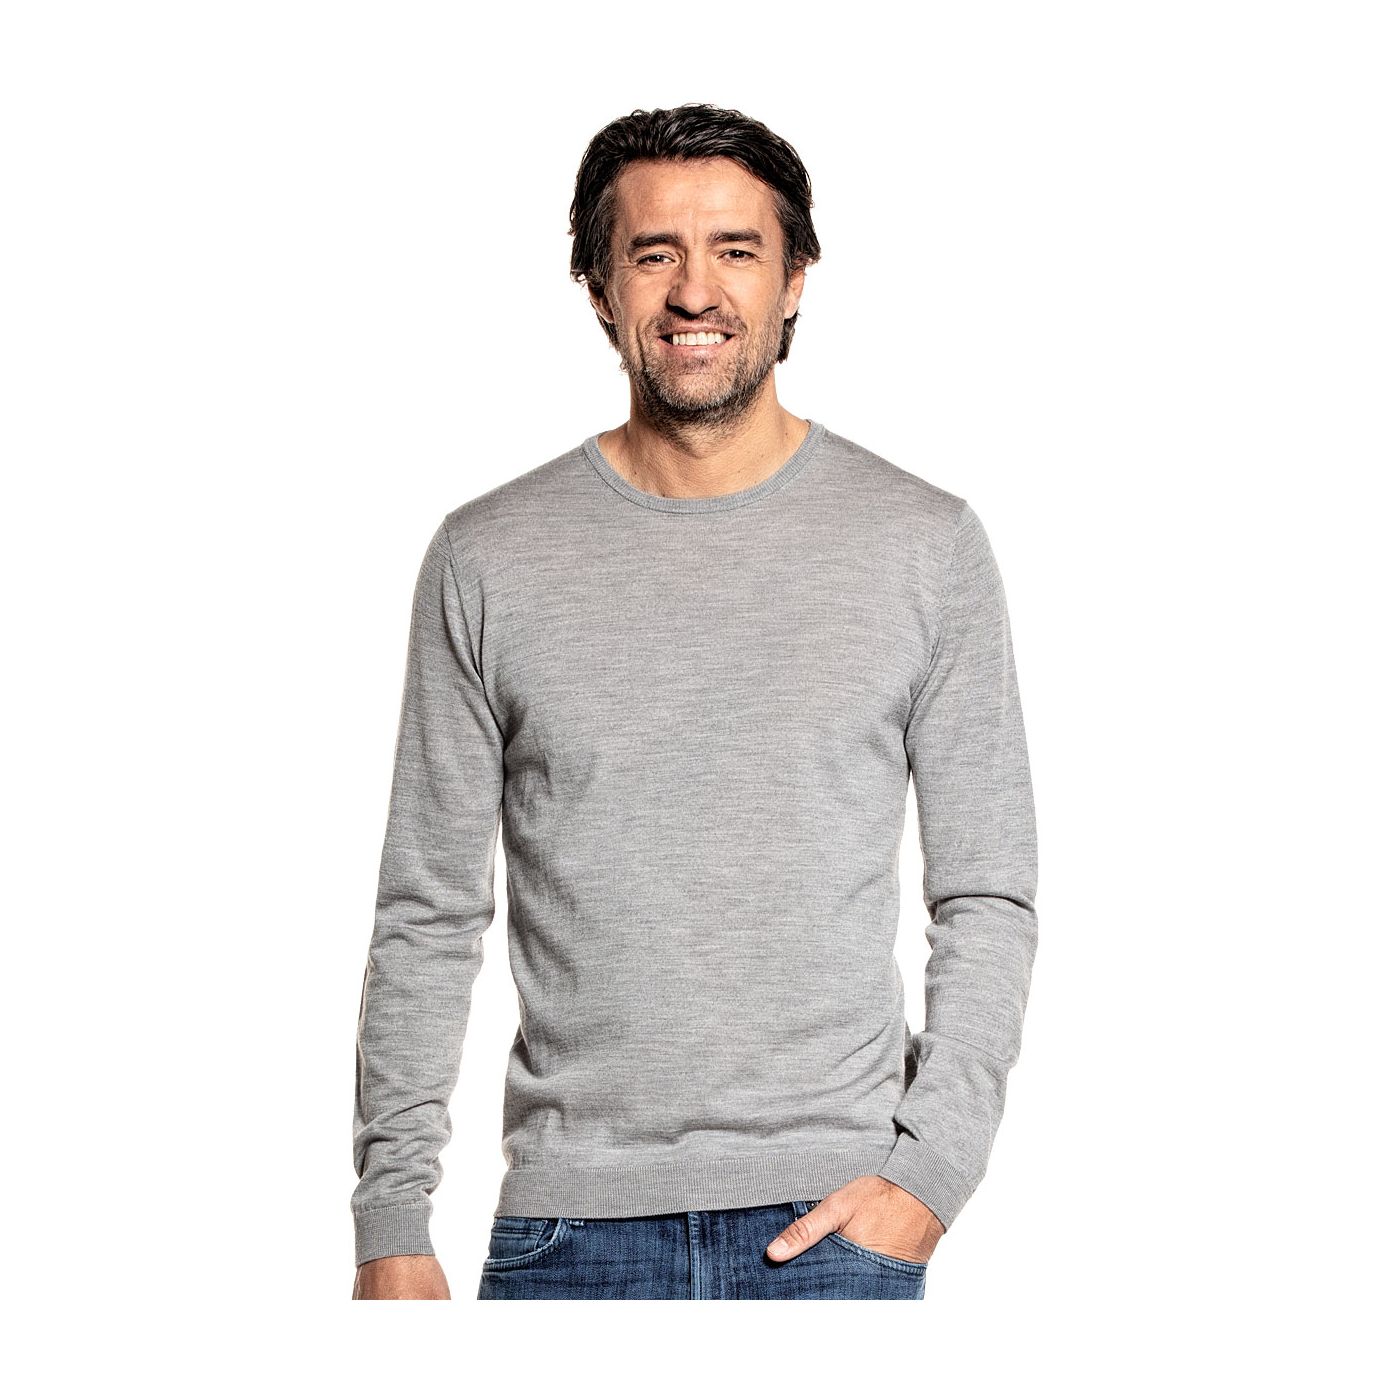 Crew neck sweater for men made of Merino wool in Grey